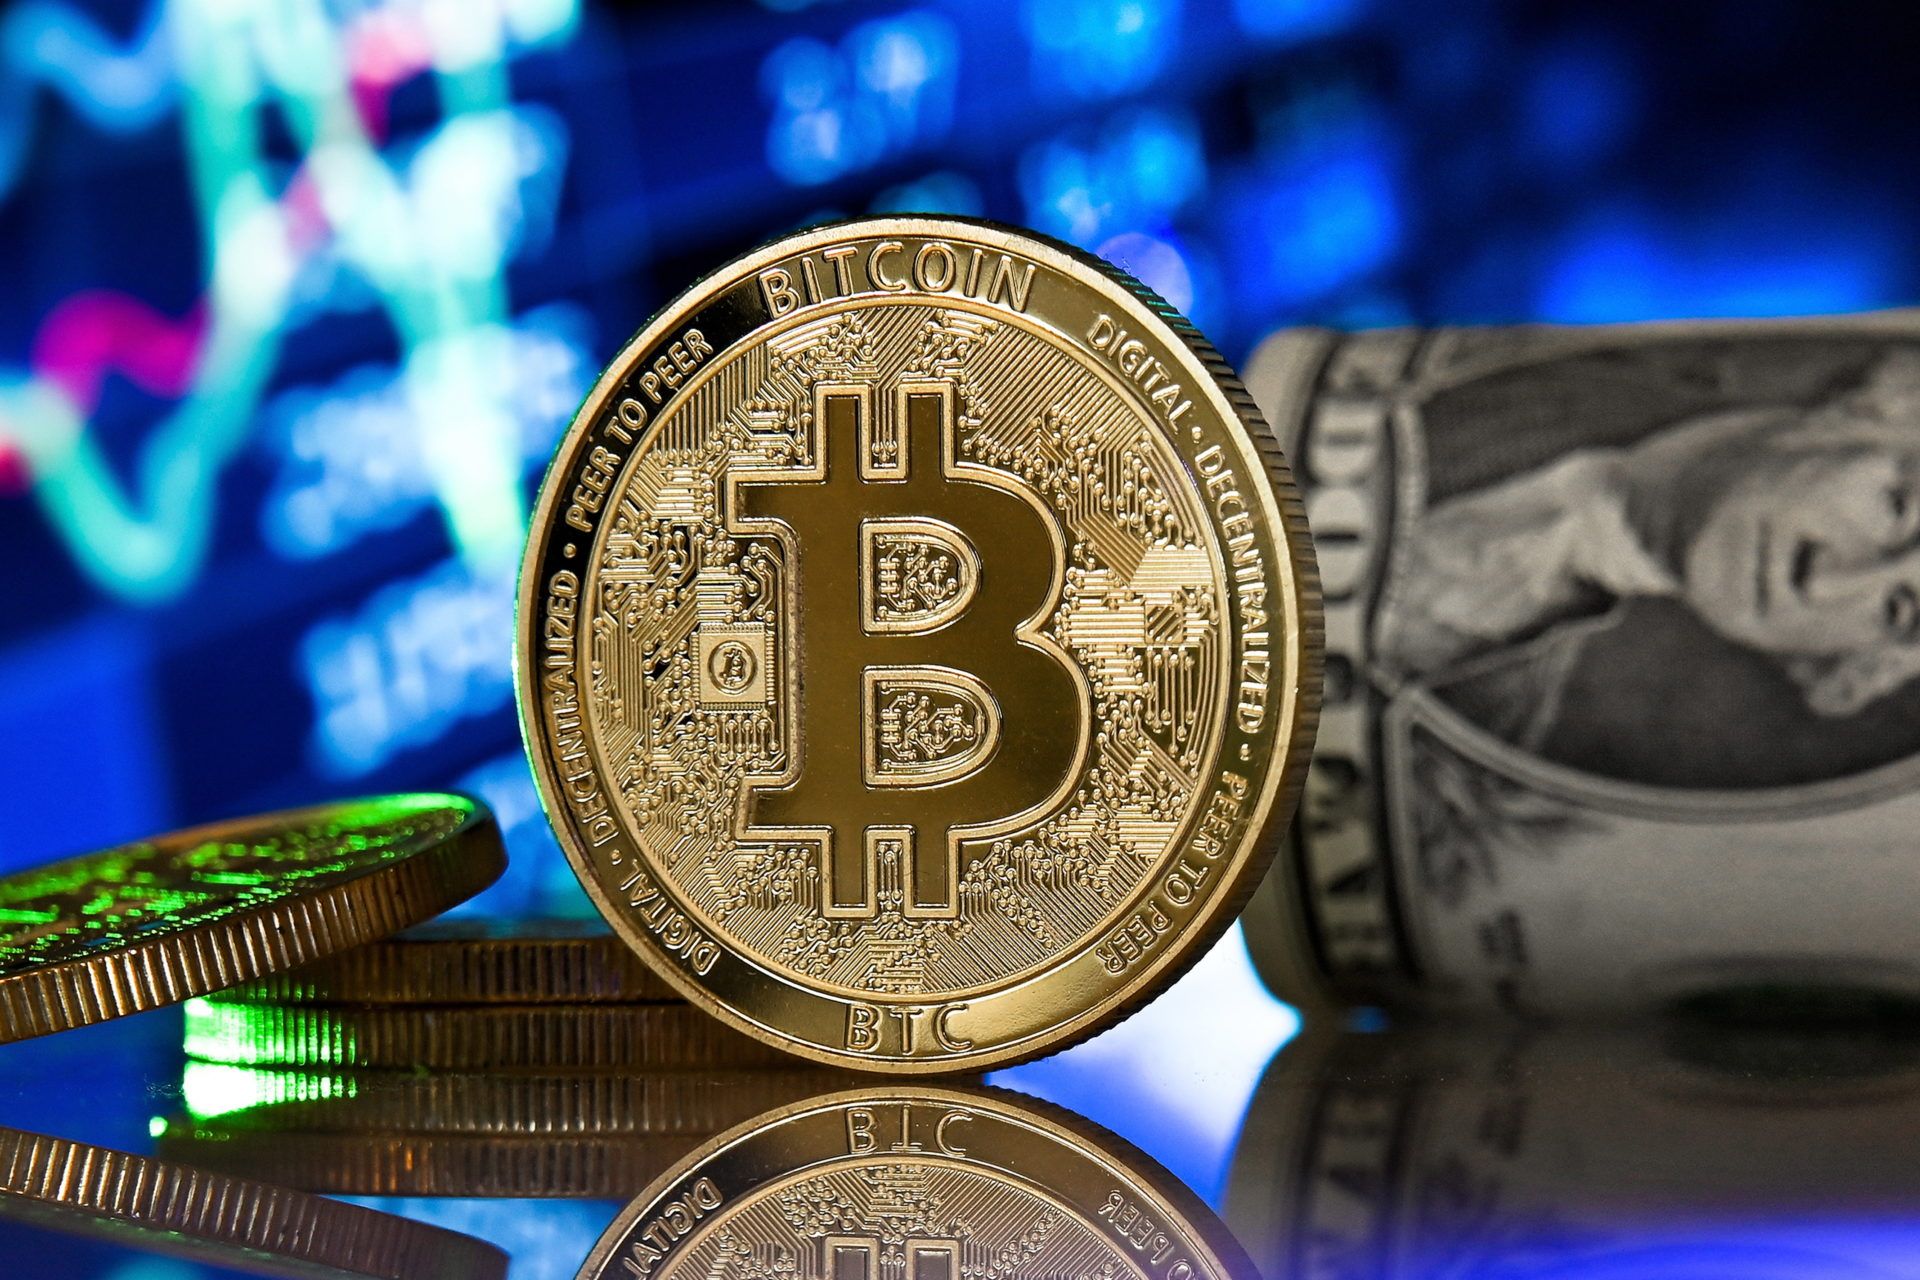 keressen pénzt otthonról online 2020-ban Peter thiel fektessen be bitcoinba